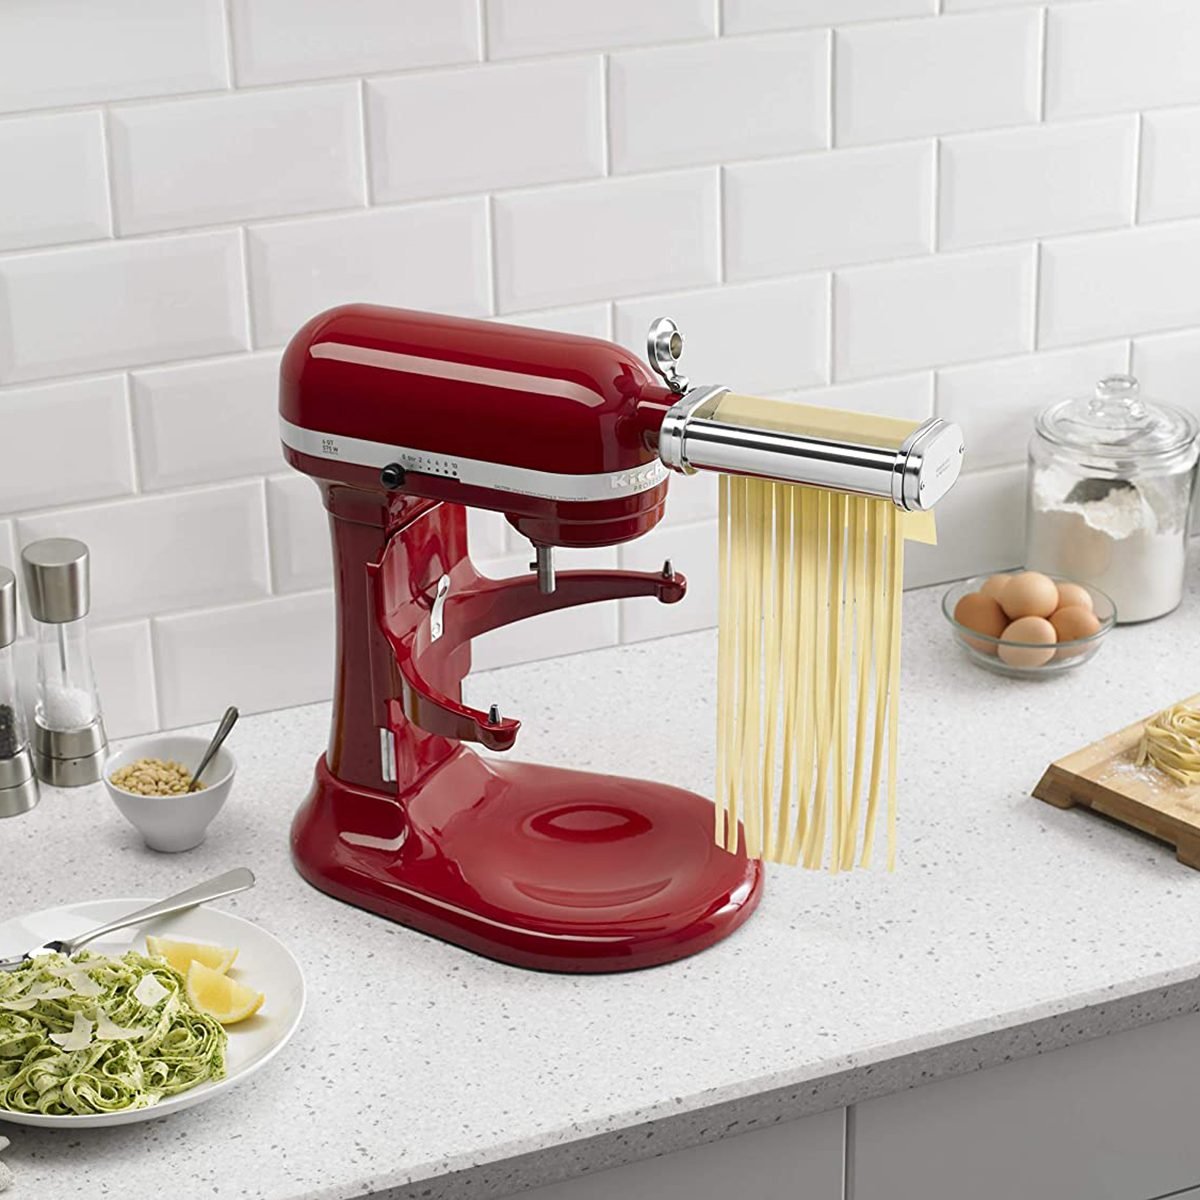 https://www.tasteofhome.com/wp-content/uploads/2020/05/kitchenaid-3-Piece-Pasta-Roller-Cutter-Set.jpg